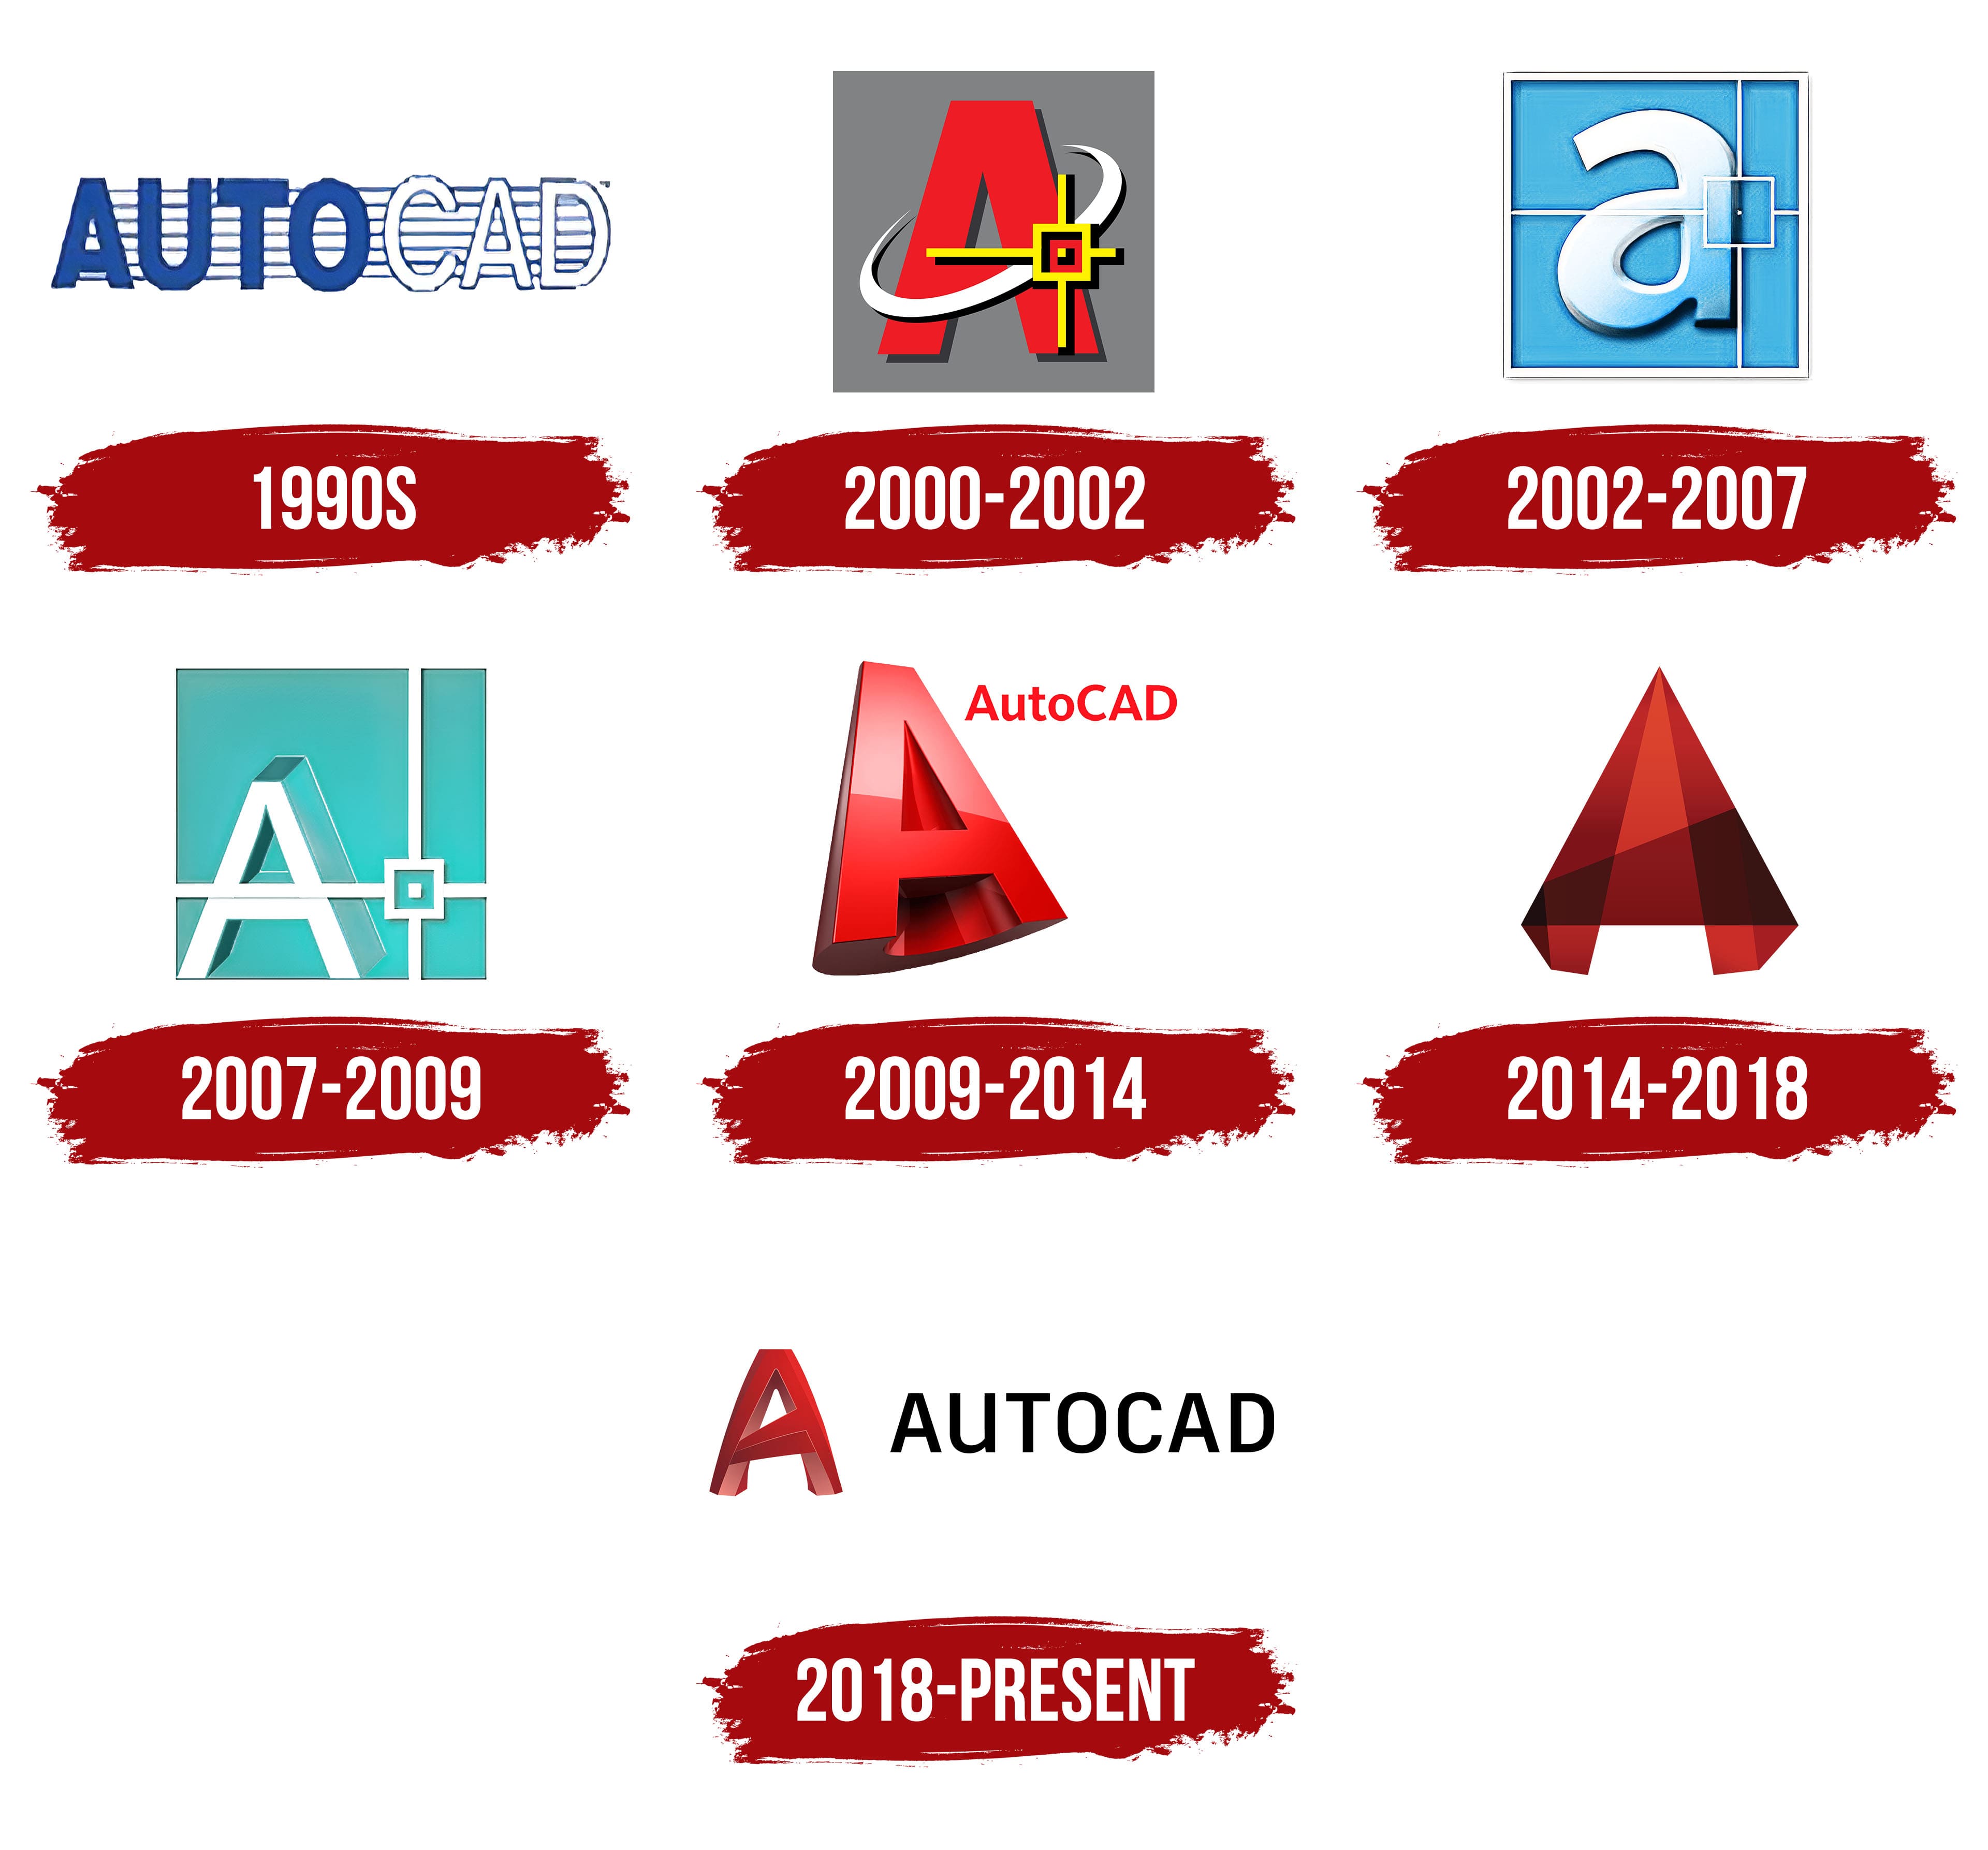 autocad logo design